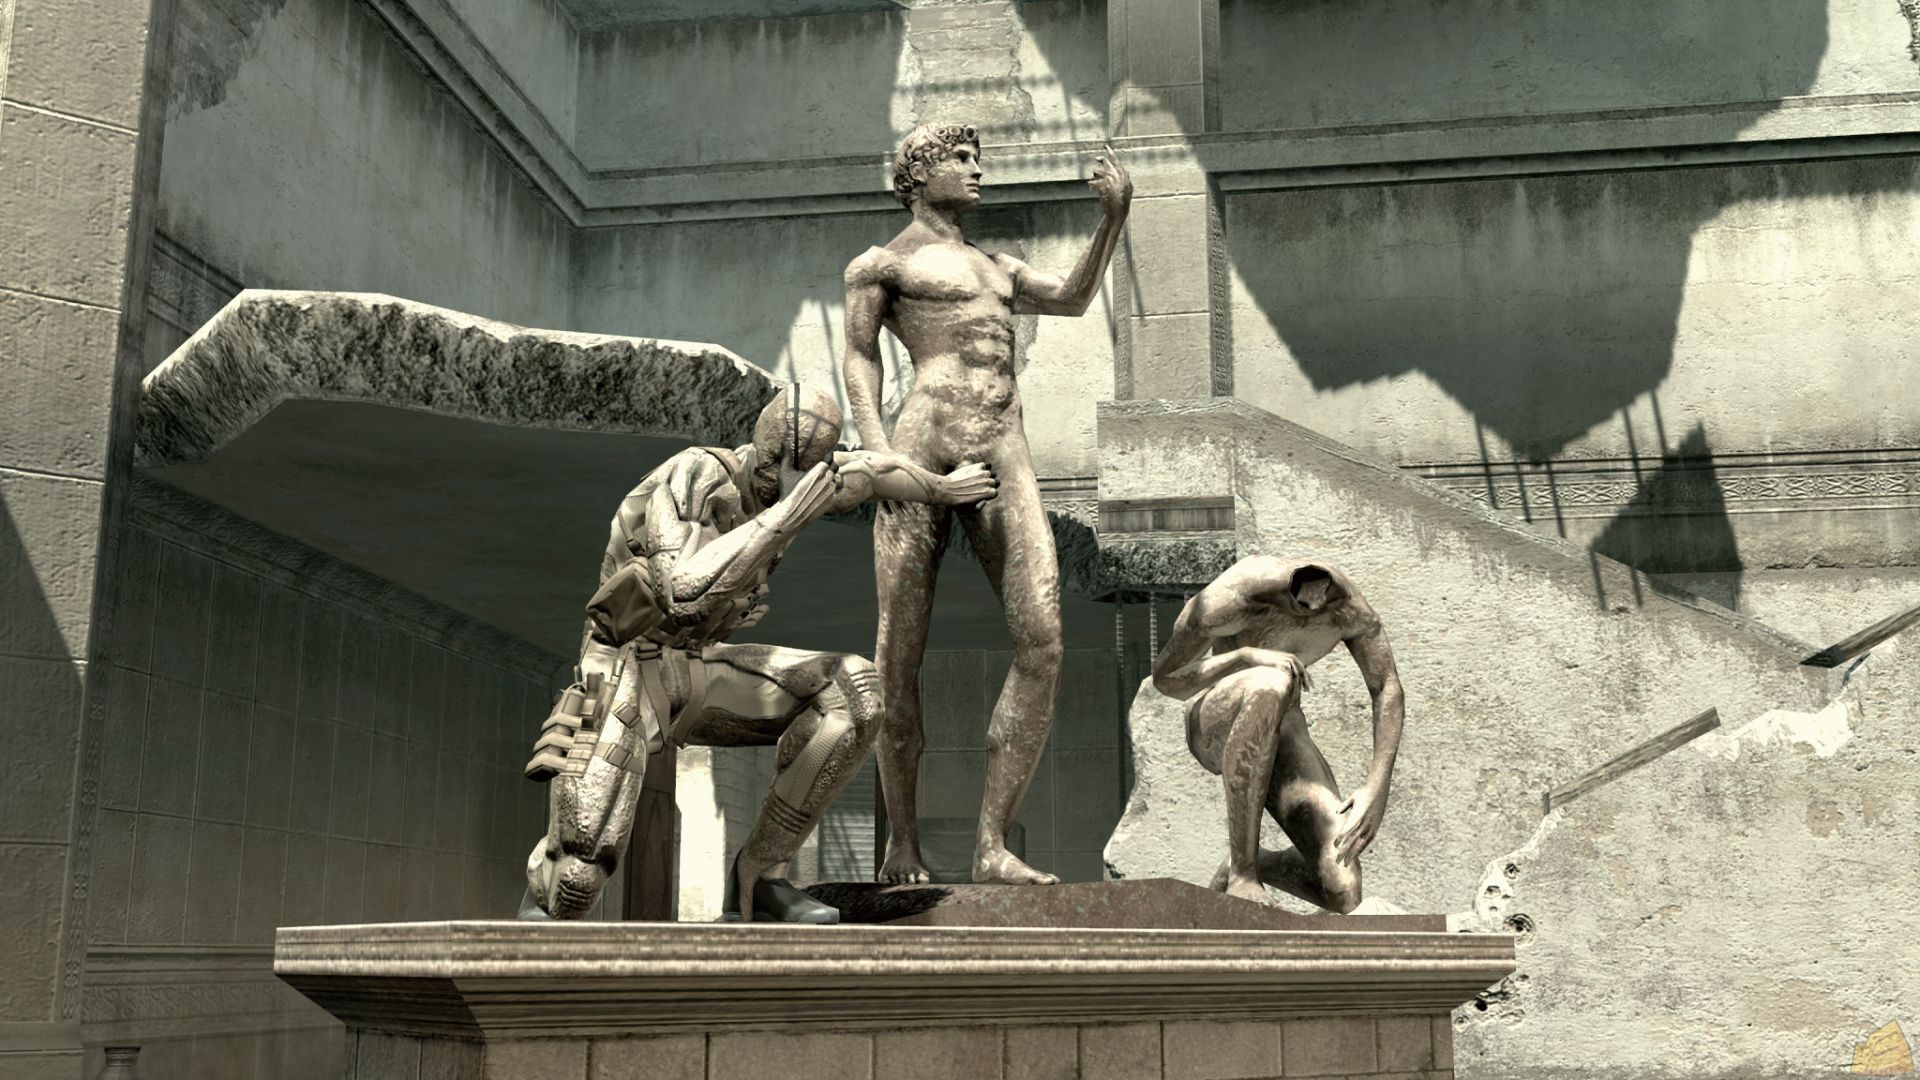 Metal Gear Solid, Solid Snake, statues - desktop wallpaper